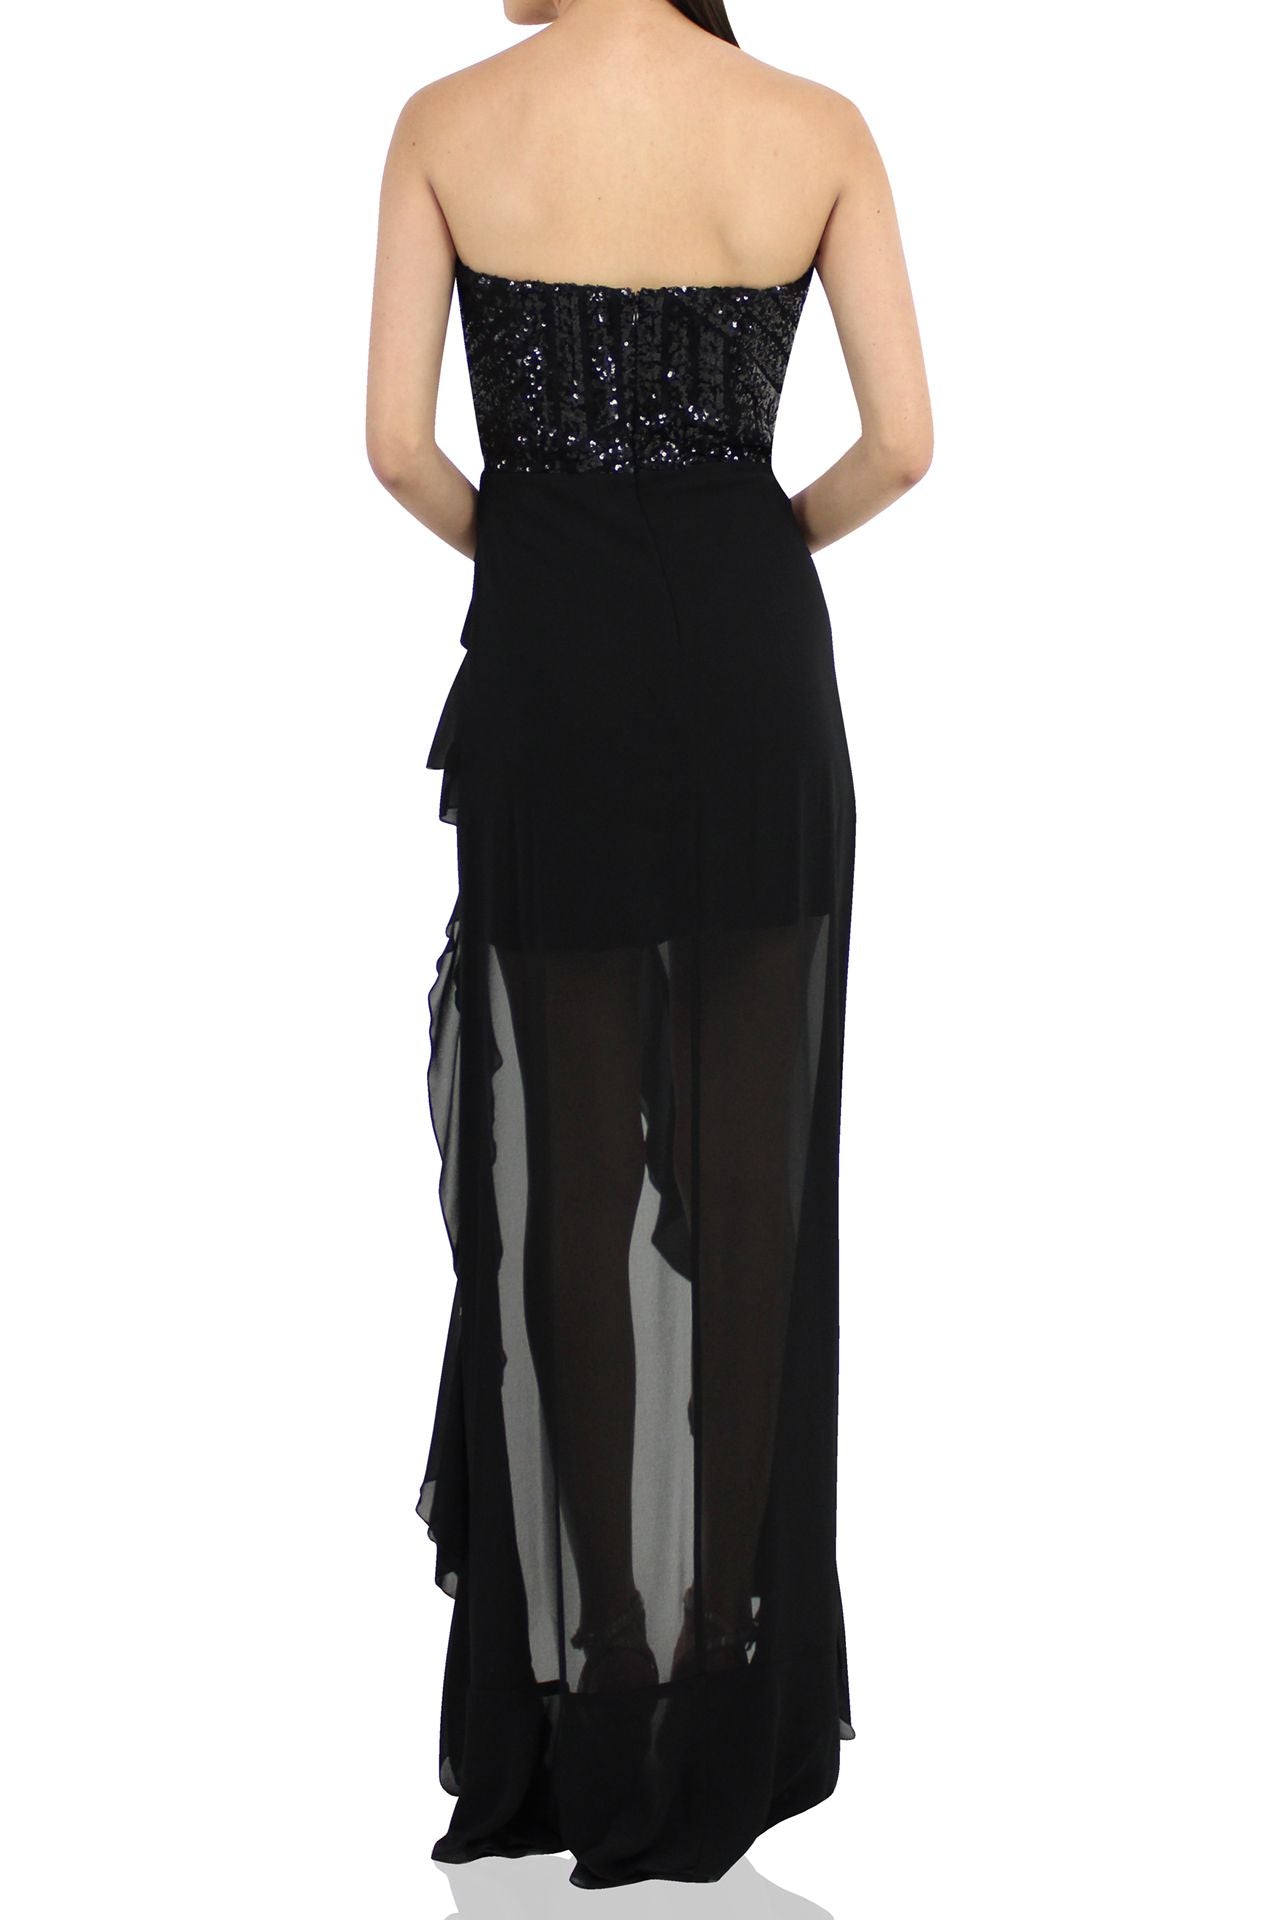 "high low dress sequin"  "Kyle X Shahida" "black sequin party dress" "womens black sequin dress"